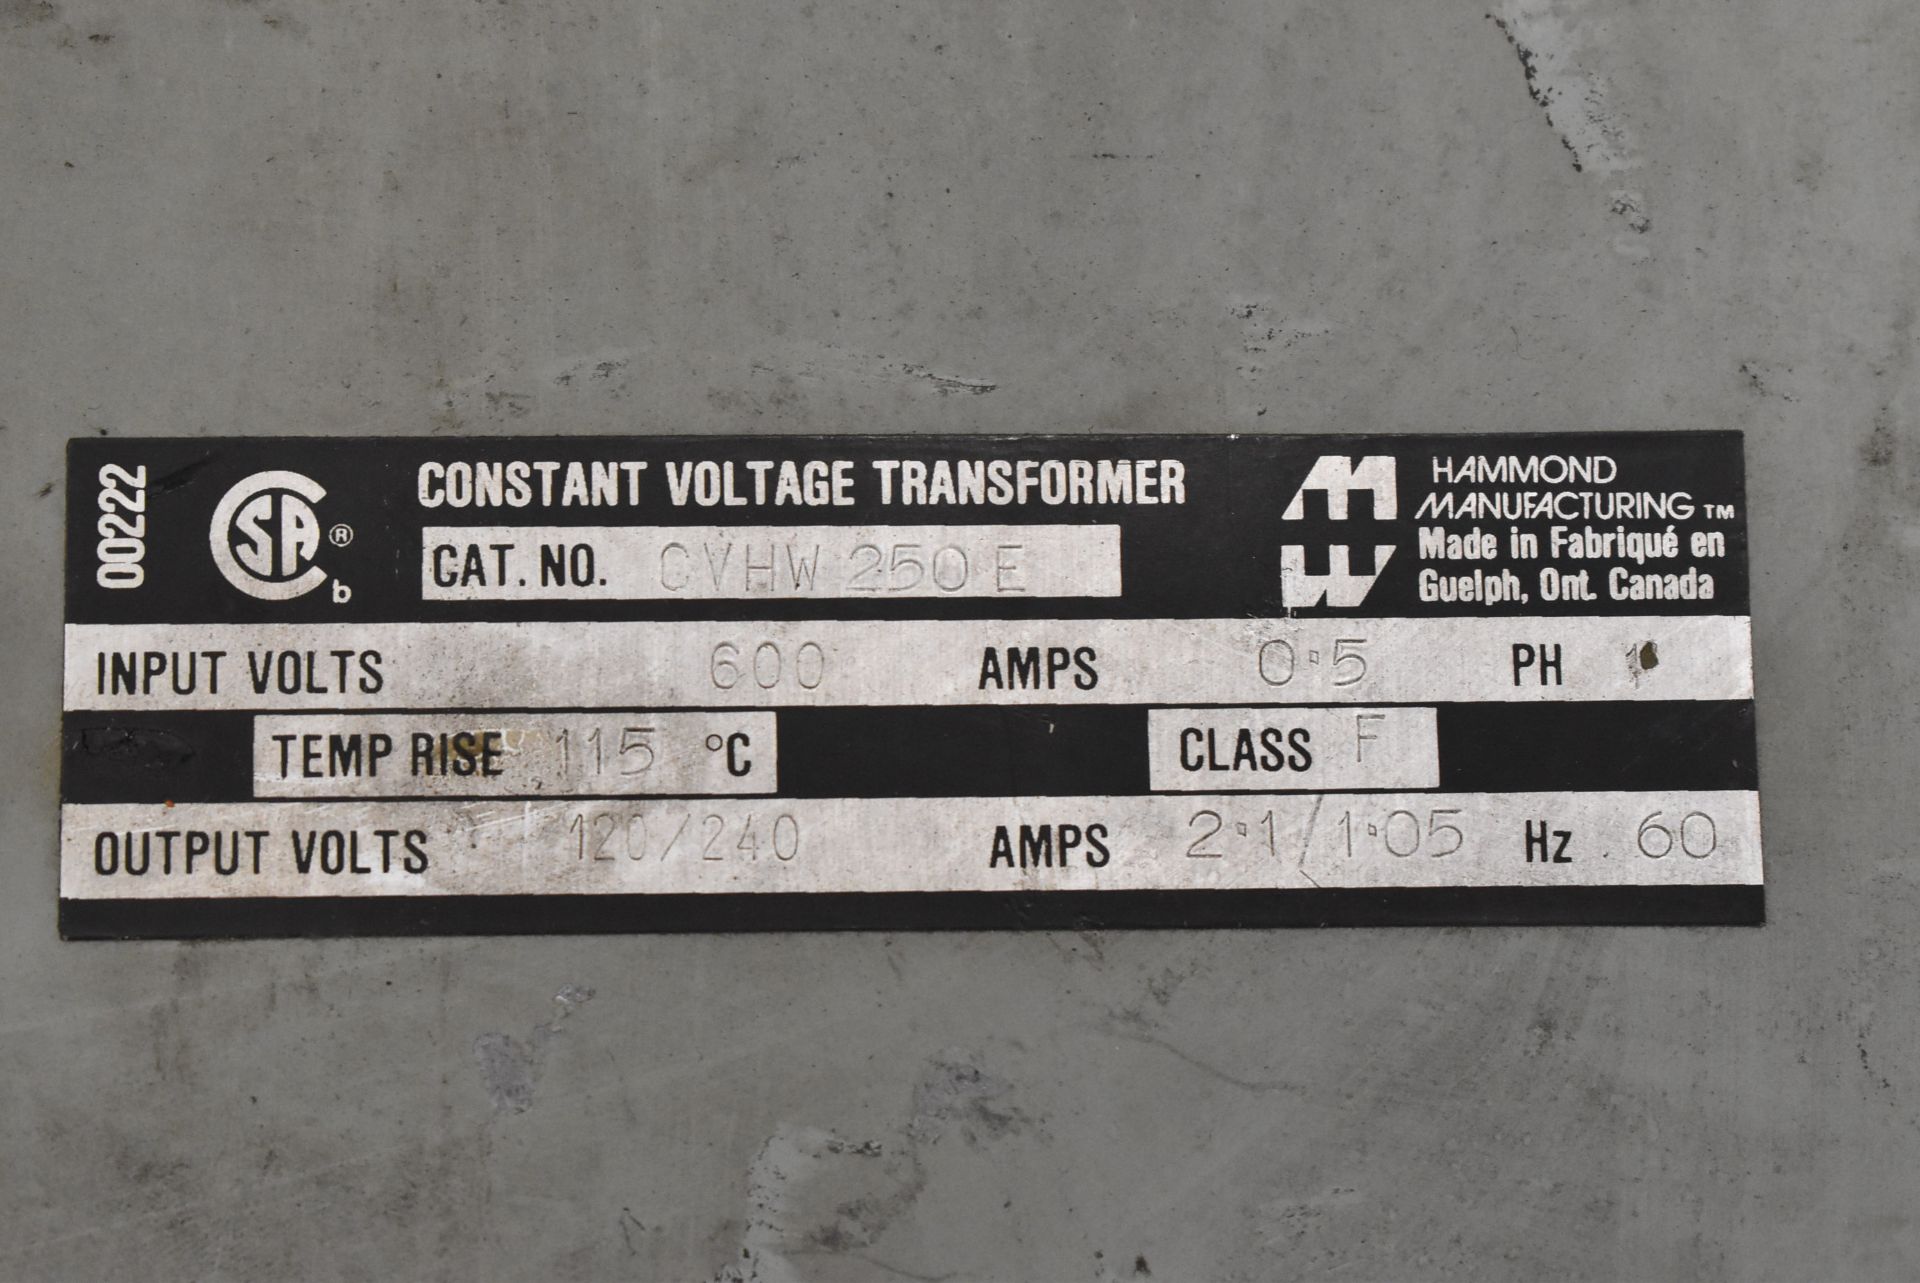 LOT/ (6) HAMMOND CONSTANT VOLTAGE TRANSFORMERS, (7) HAMMOND SINGLE PHASE TRANSFORMERS (CI) - Image 3 of 5